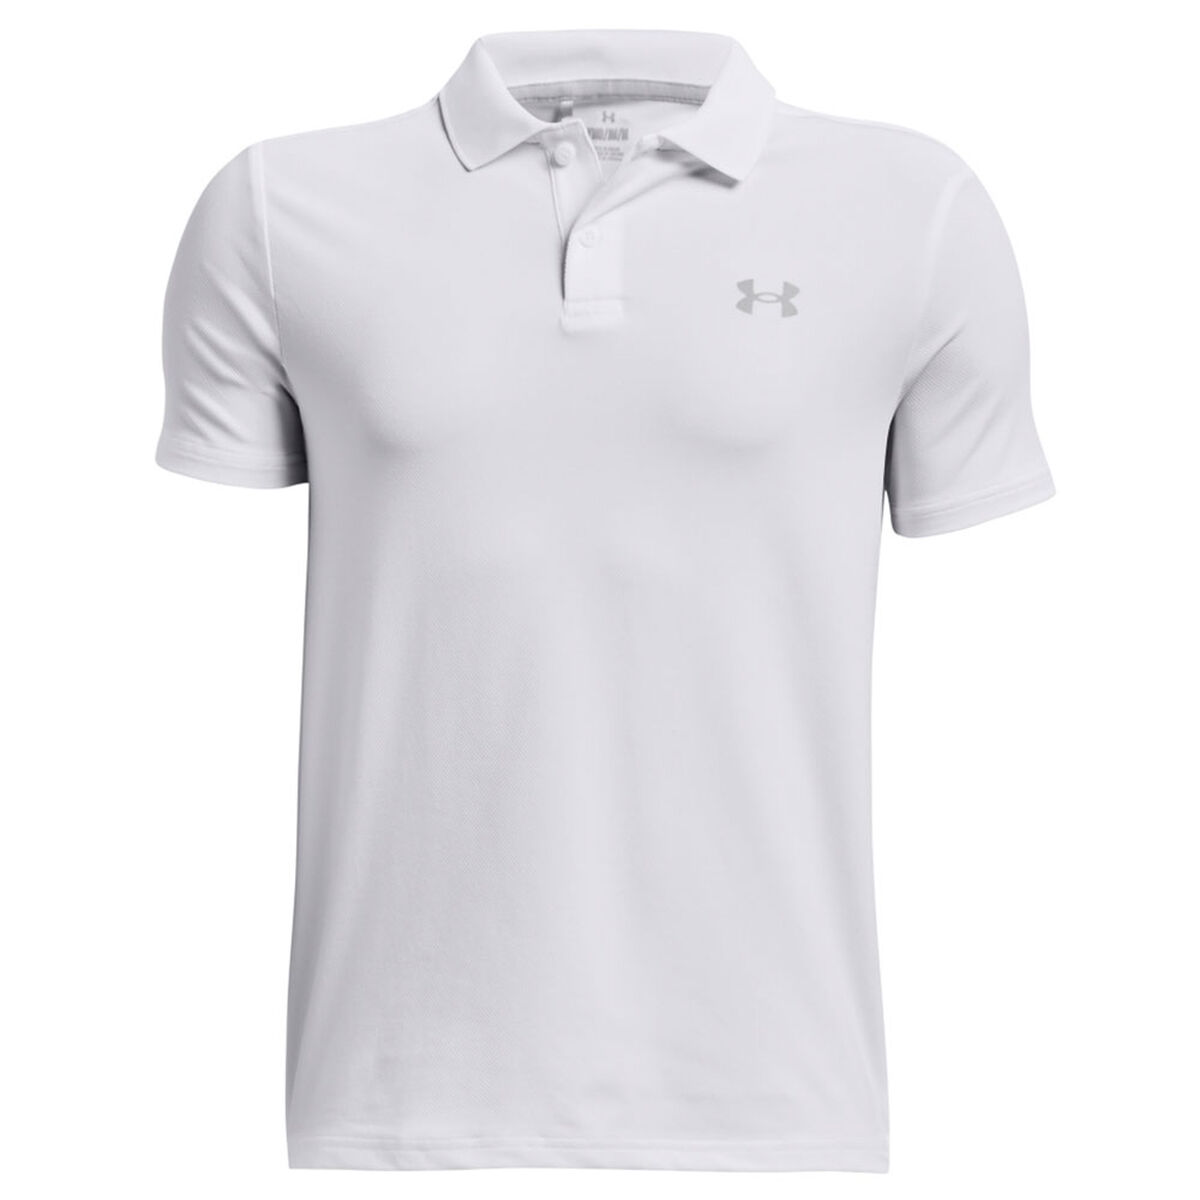 Under Armour Junior Performance Golf Polo Shirt, Unisex, White/pitch gray, 7-8 years | American Golf von Under Armour